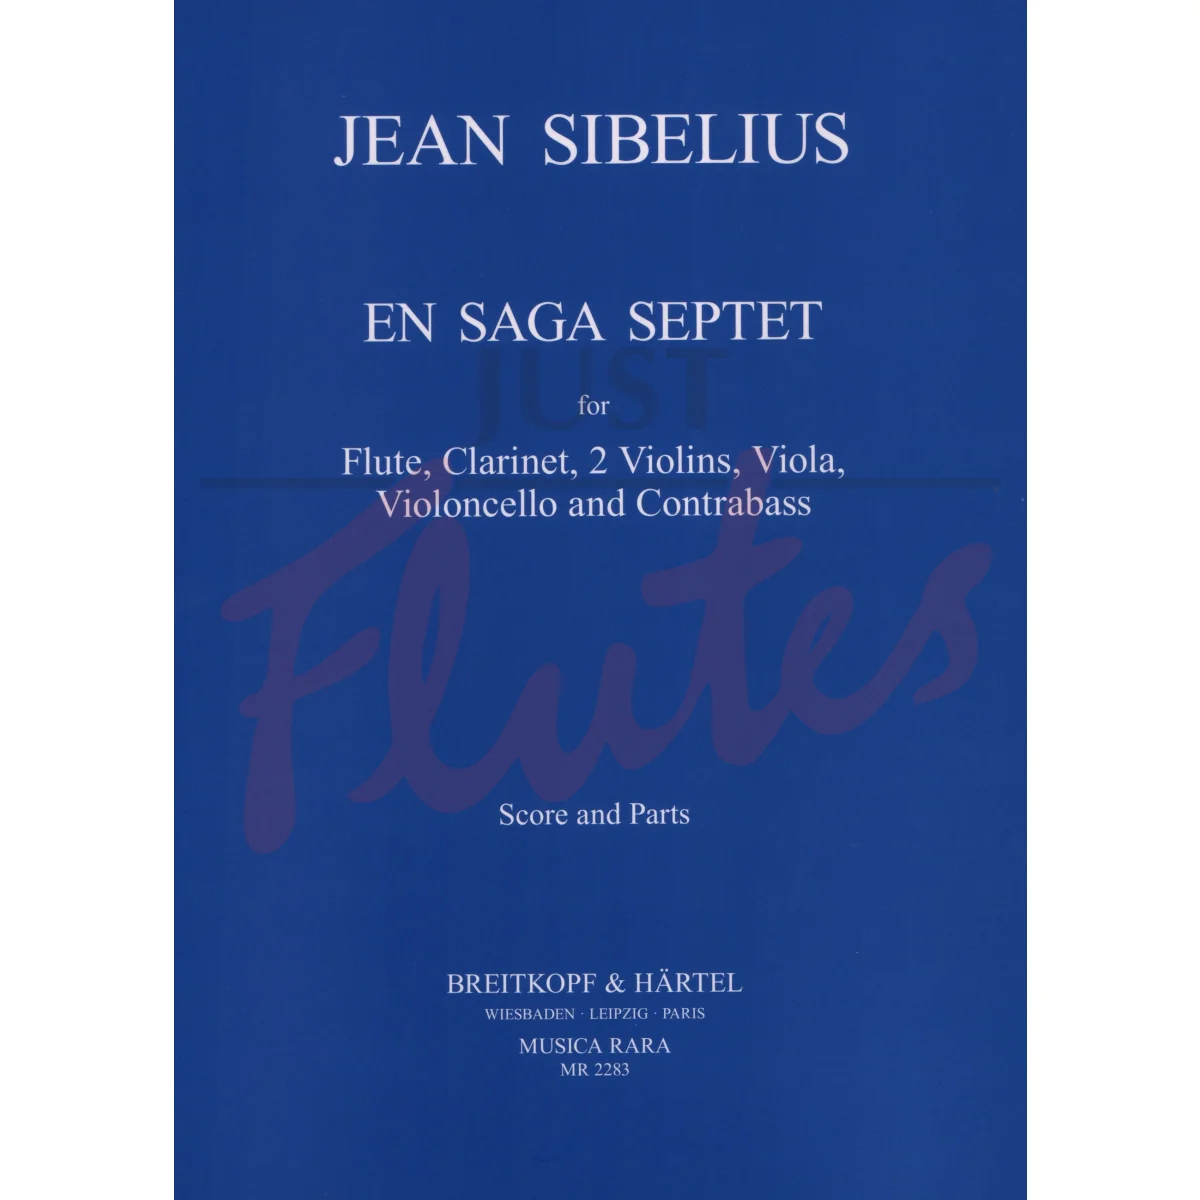 En Saga Septet for Flute, Clarinet, Two Violins, Viola, Cello and Bass